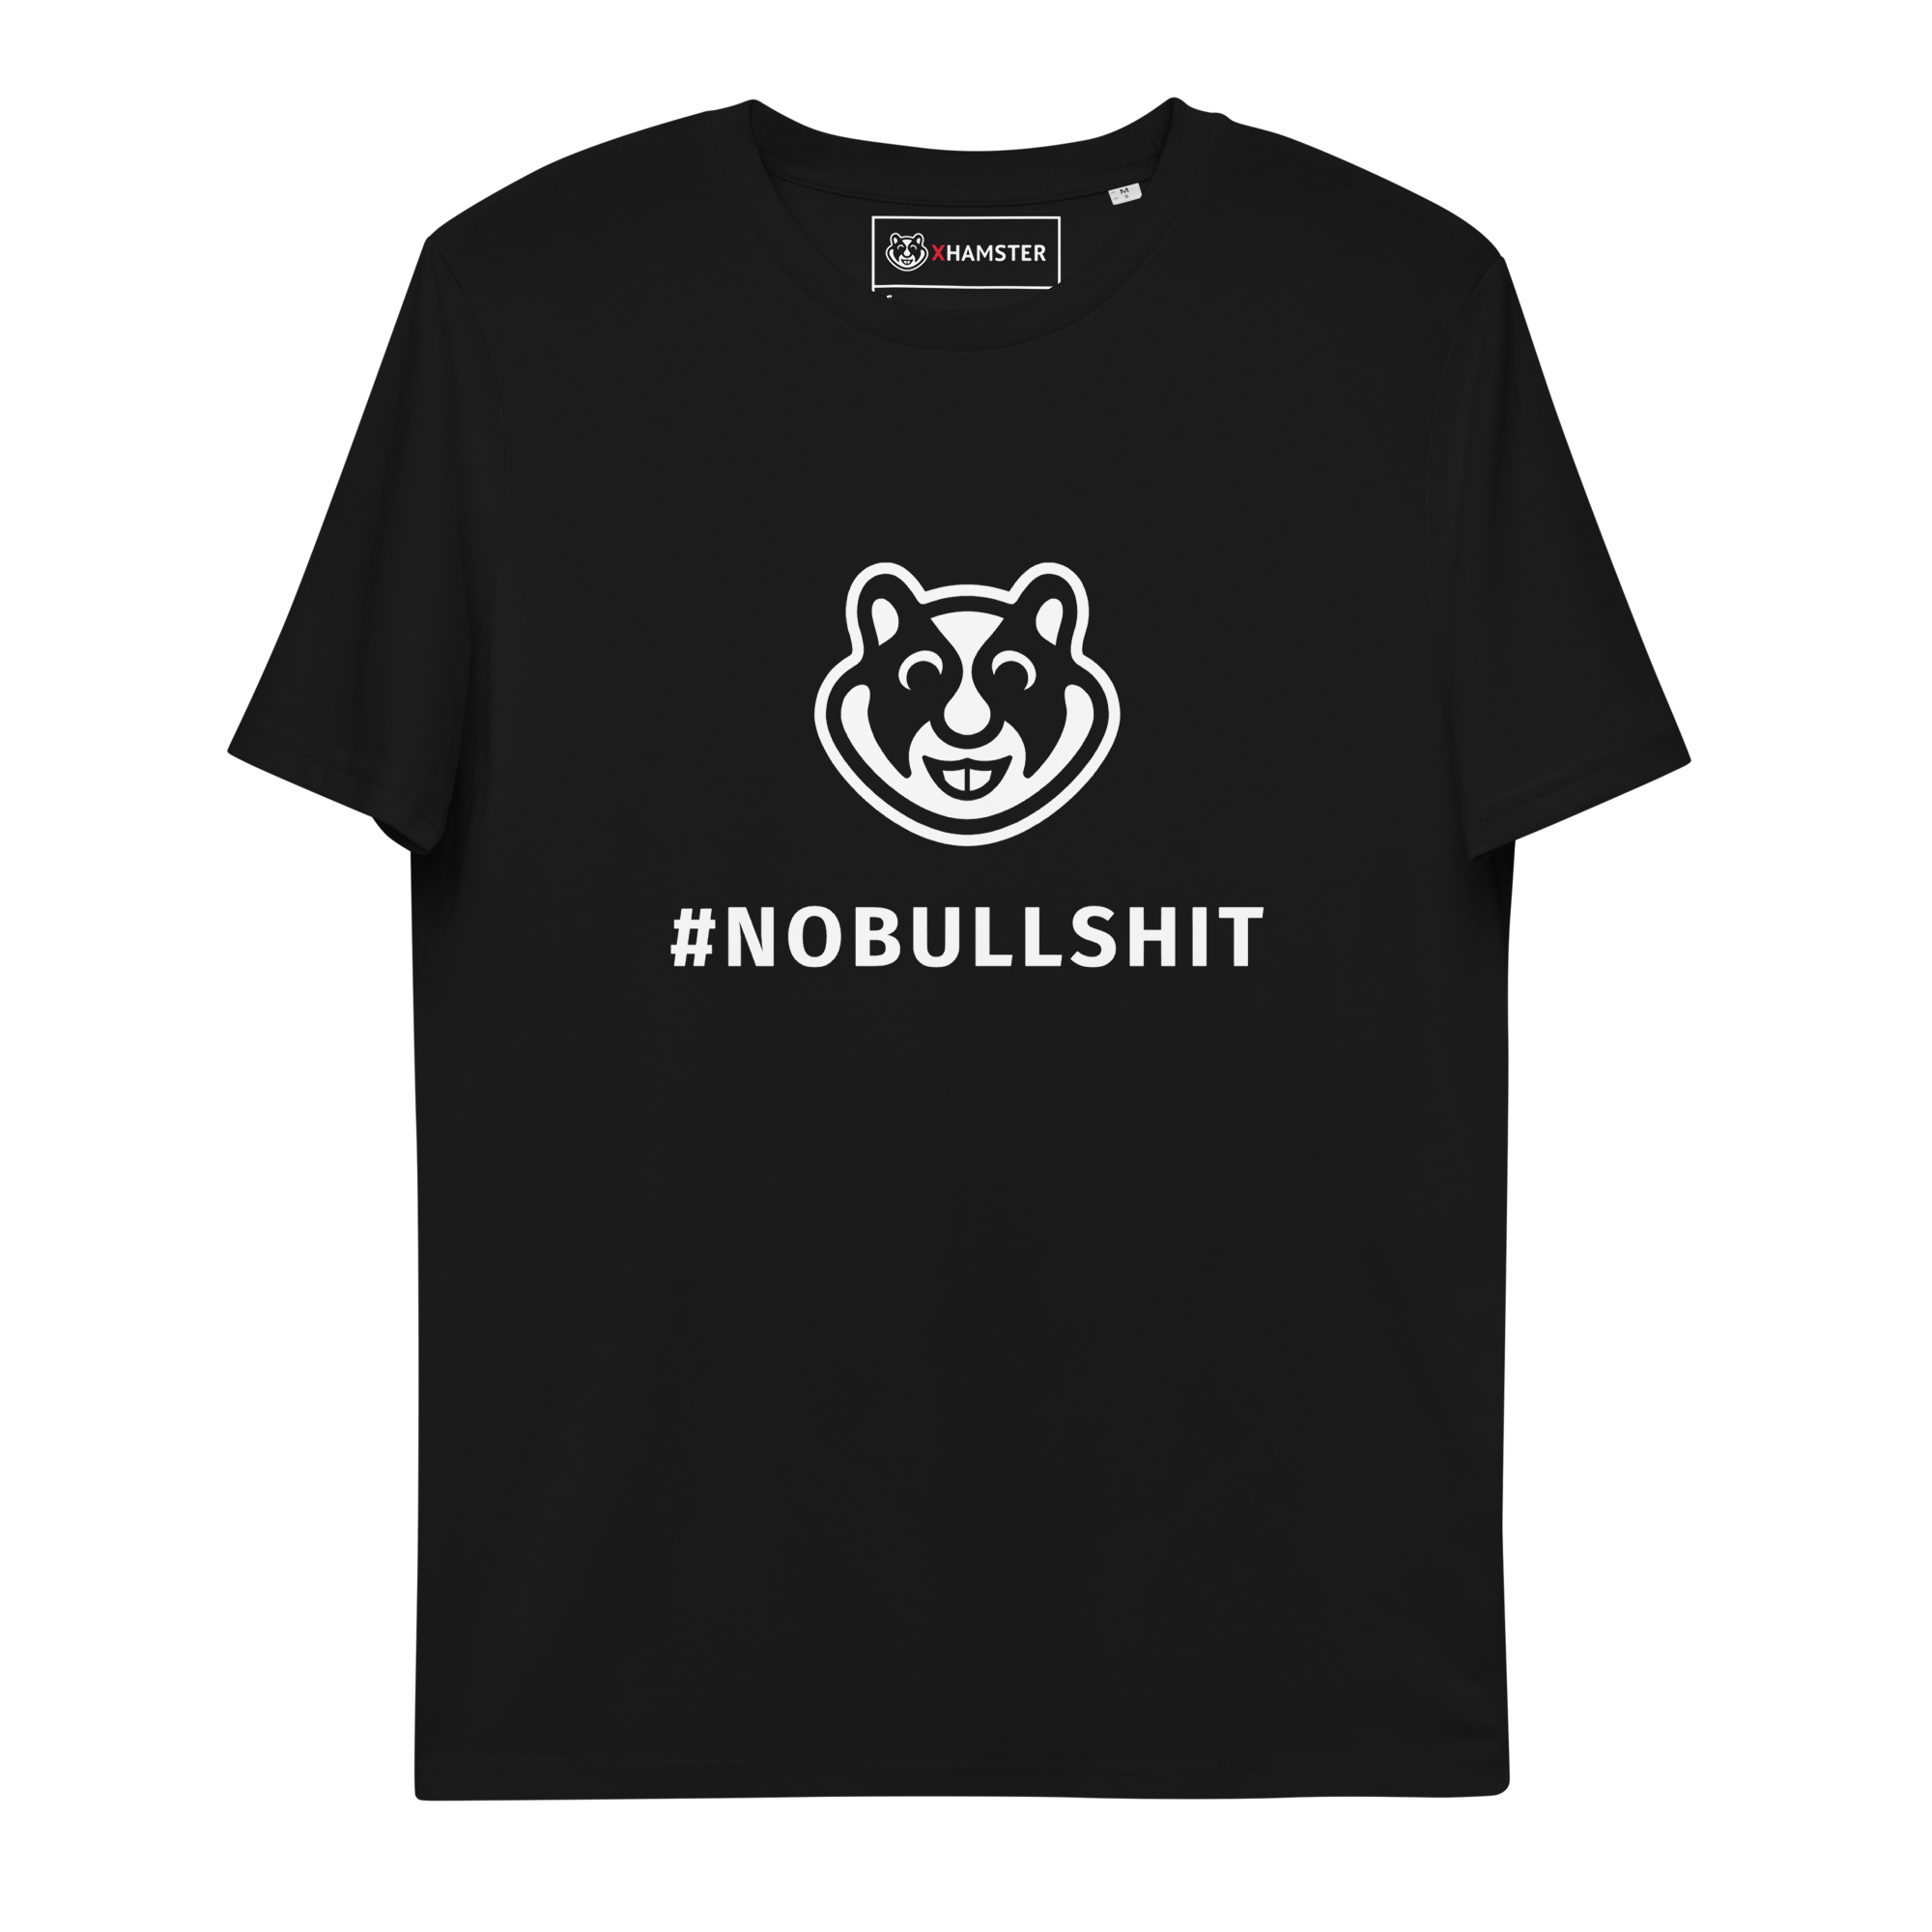 xHamster Unisex Cotton T-shirt #nobullshit Black/Dark Heather Grey